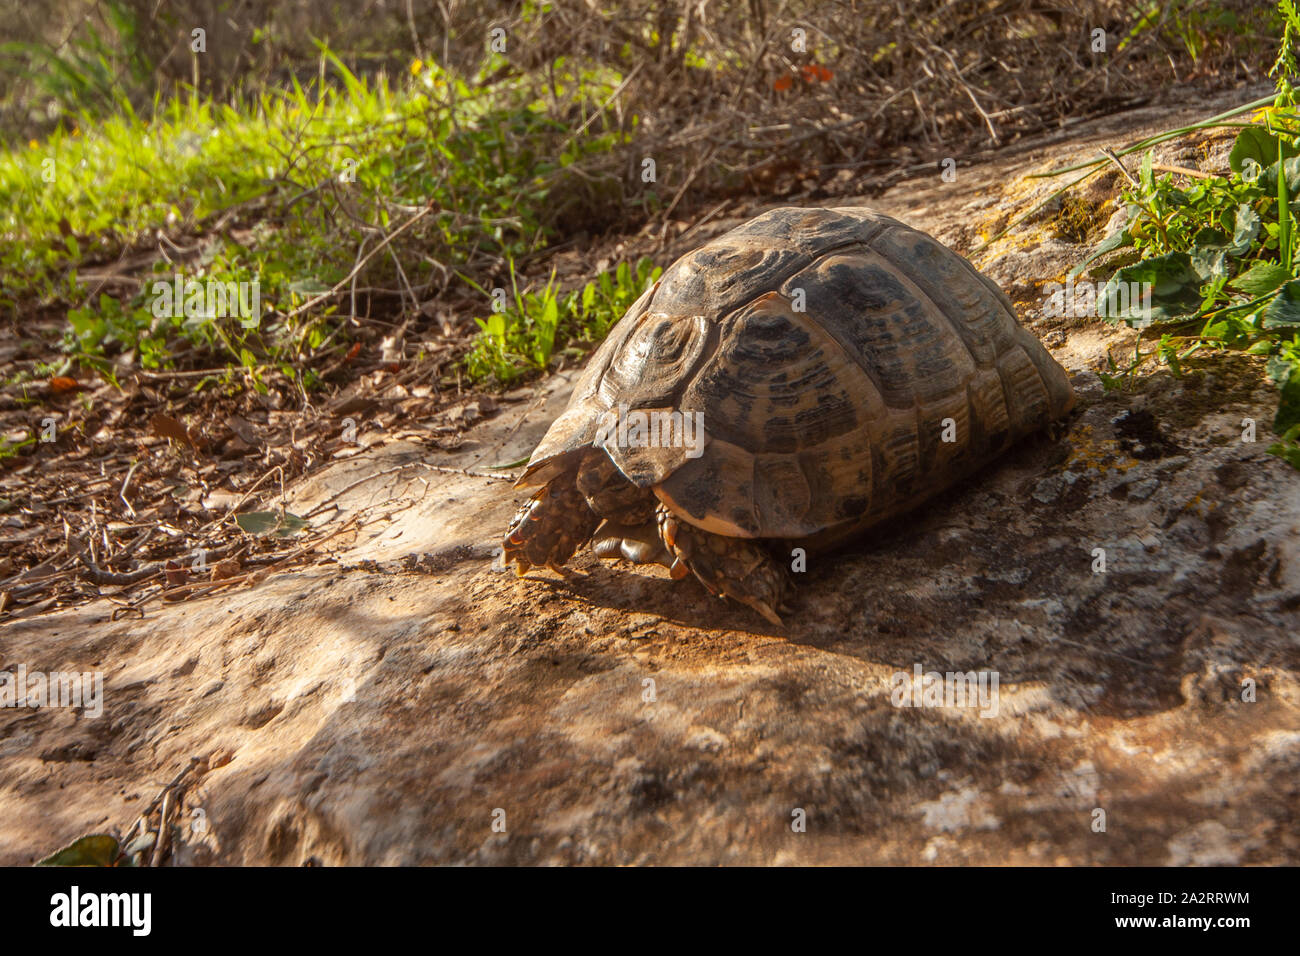 Greek tortoise (Testudo graeca) צב יבשה מצוי Stock Photo